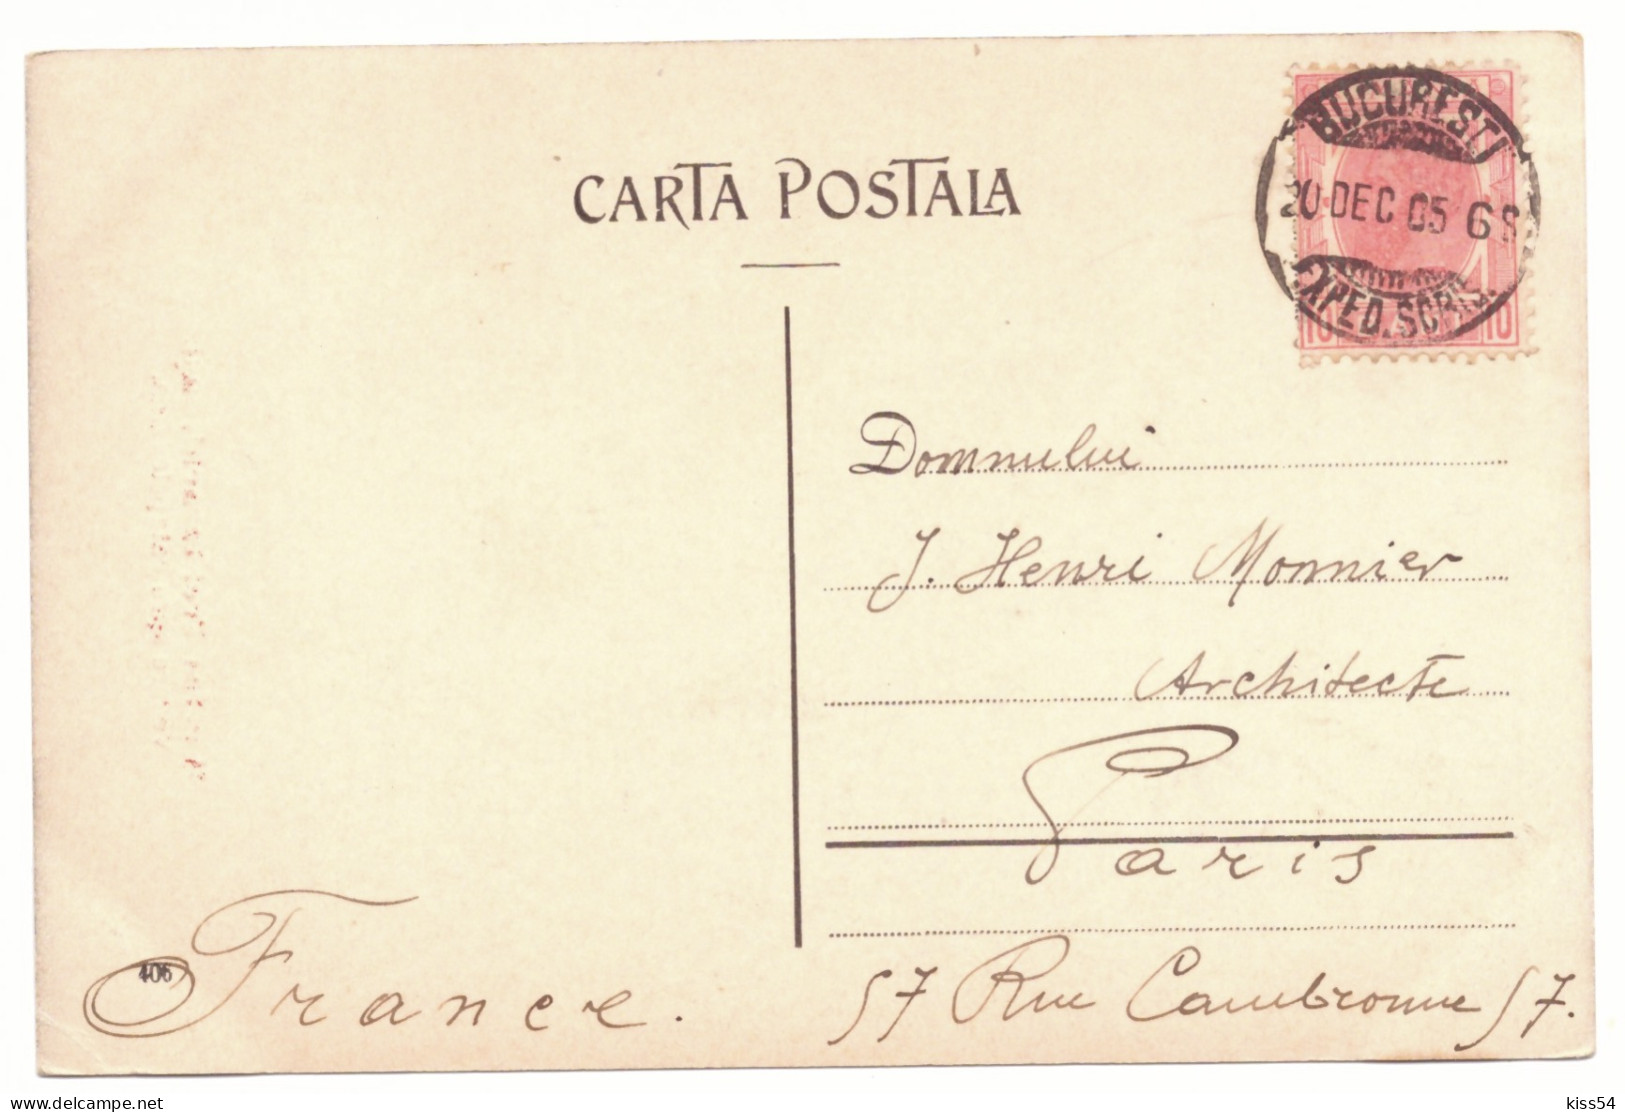 RO 09 - 21078 IASI, The Church Of TREI IERARHI, Interior, Romania - Old Postcard - Used - 1905 - Roumanie